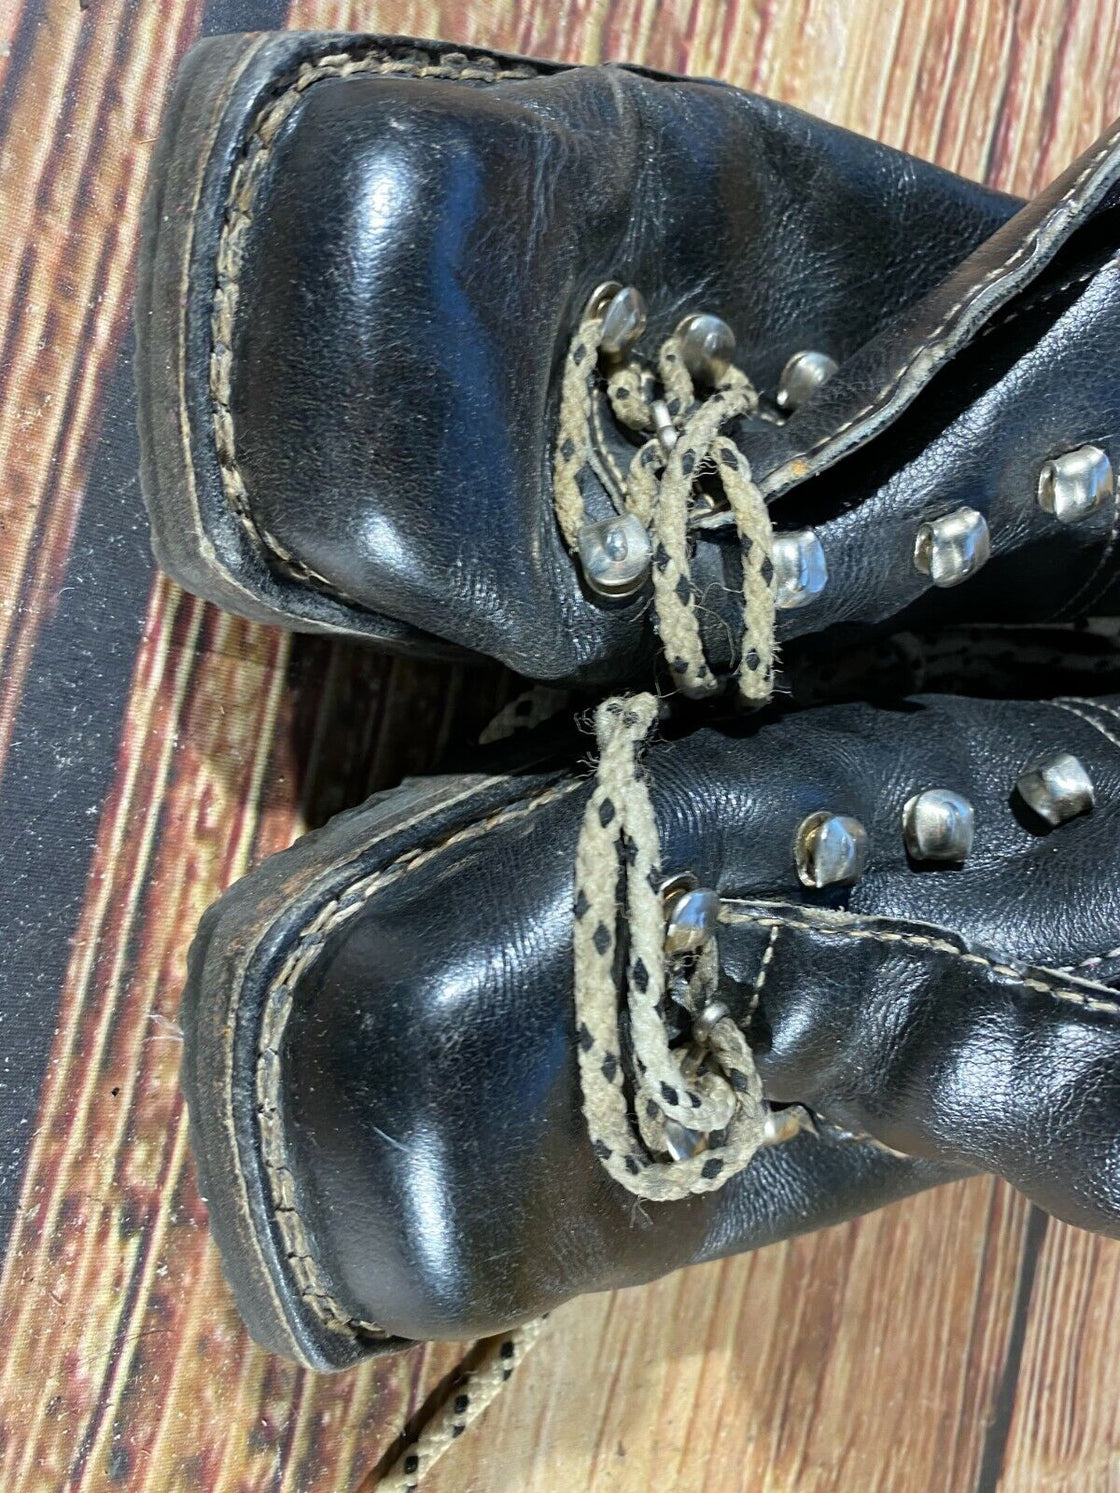 Vintage Cross Country Ski Boots Kandahar, Old Cable Bindings EU39 US6.5